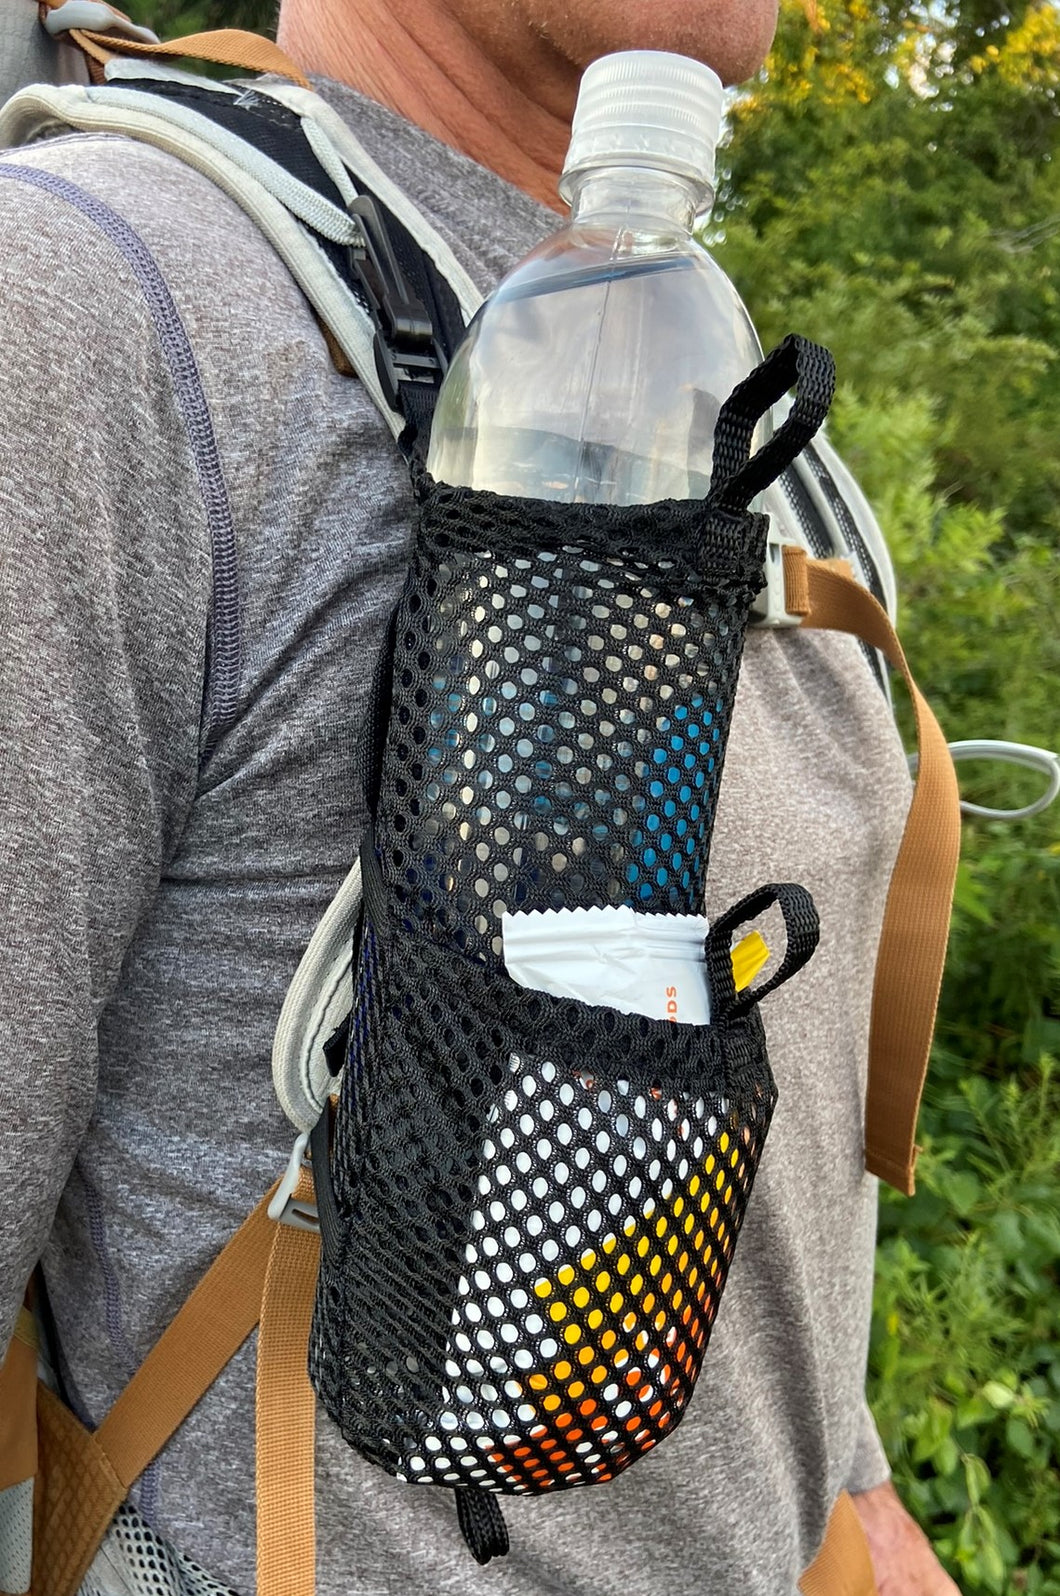 DIY Water Bottle Holders for Backpacking 